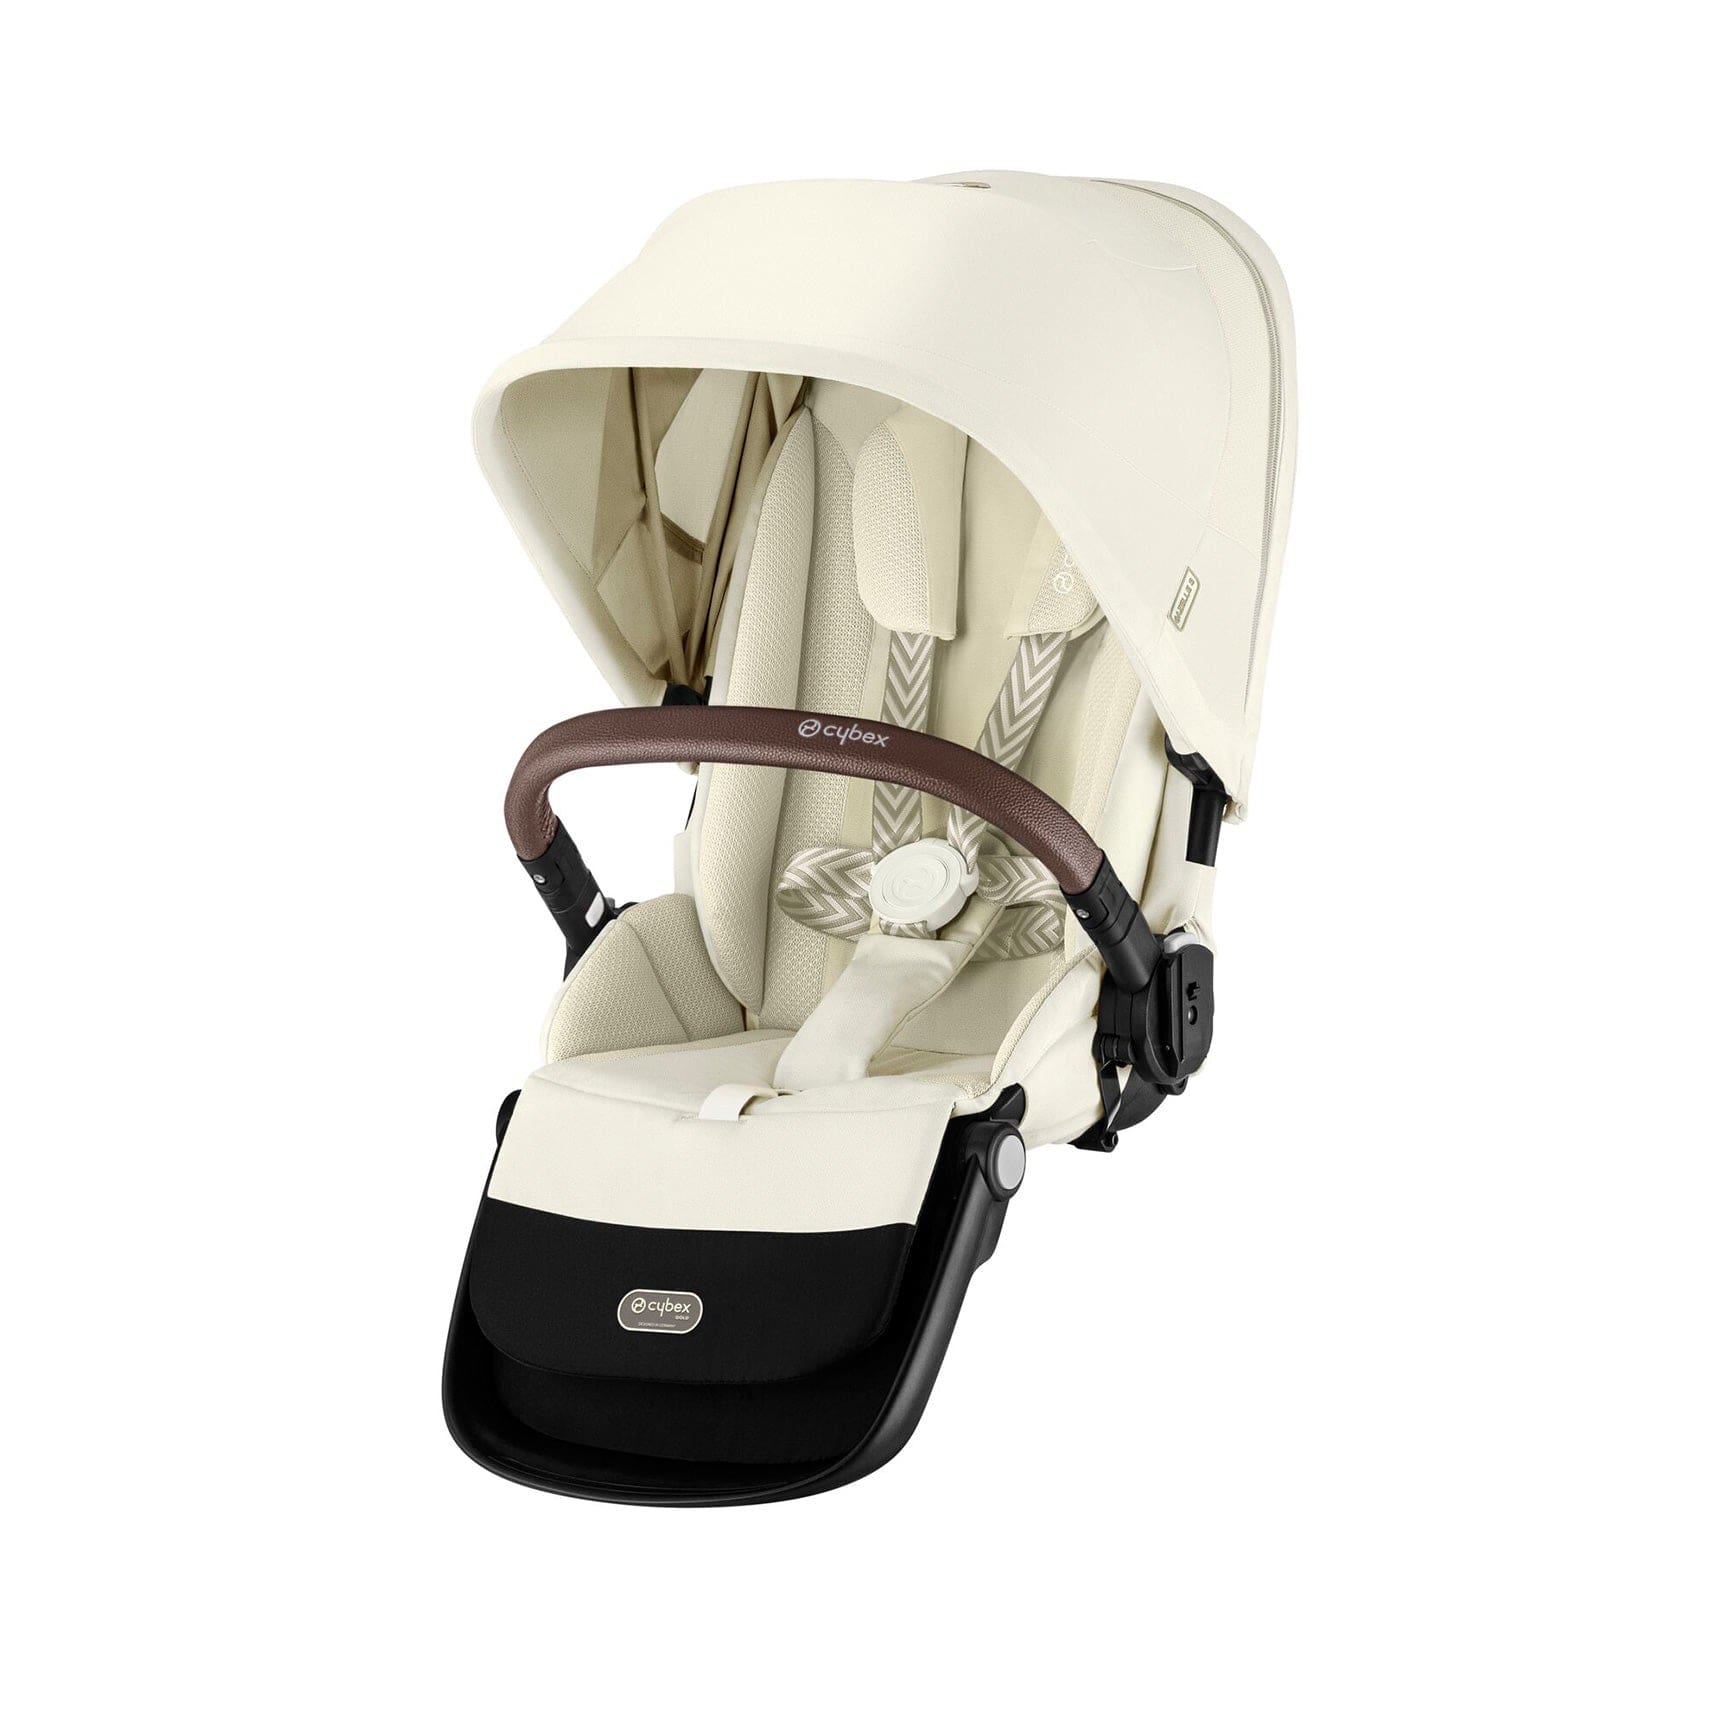 Cybex baby prams Cybex Gazelle S Seat Unit - Seashell Beige 522002773